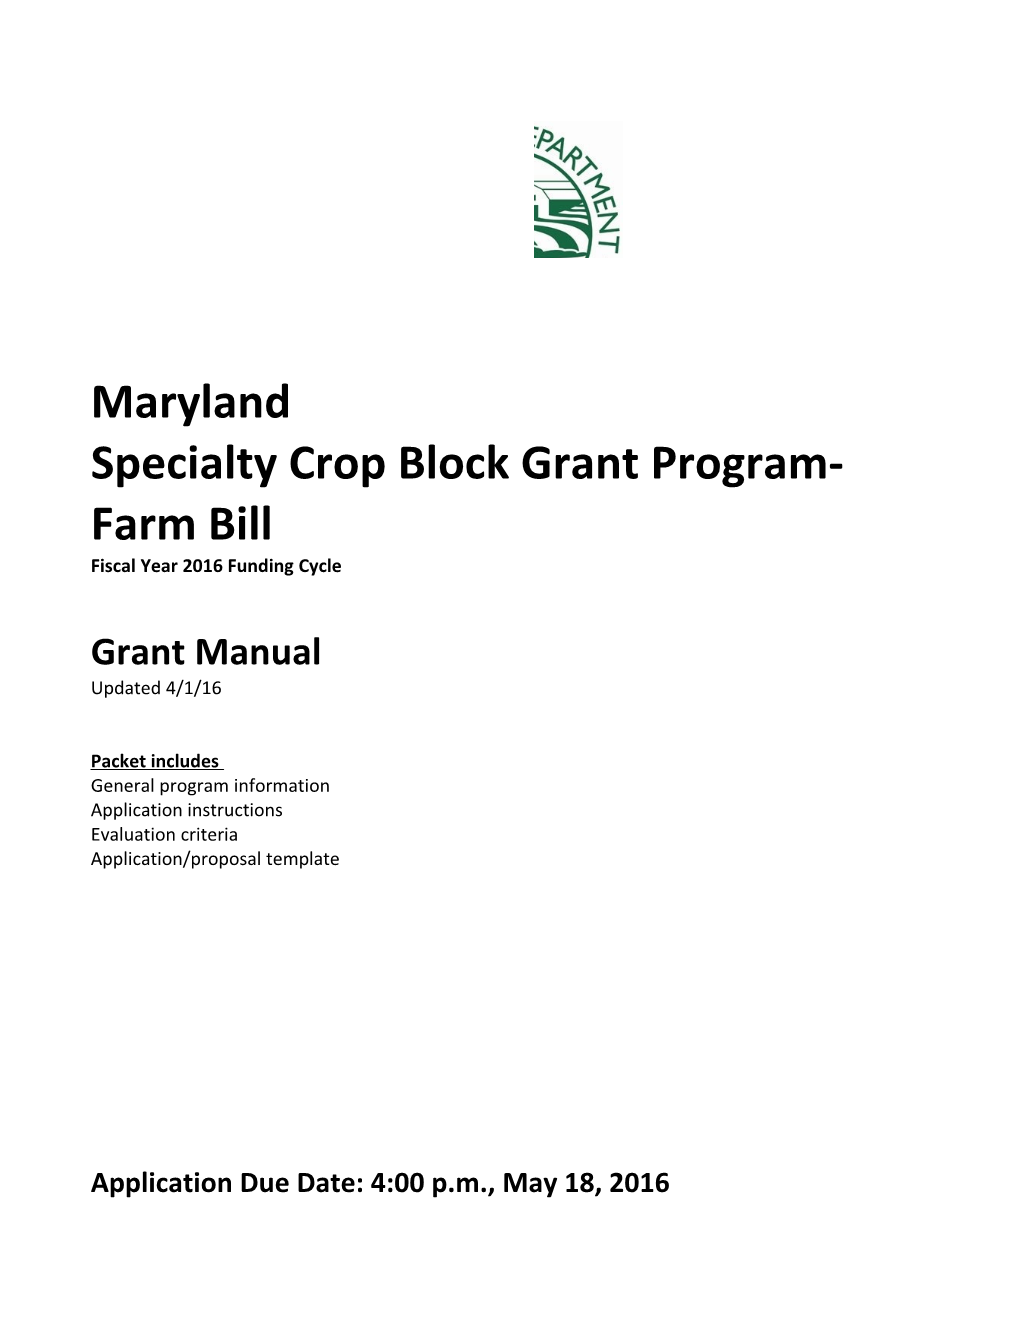 Specialty Crop Blockgrant Program-Farm Bill